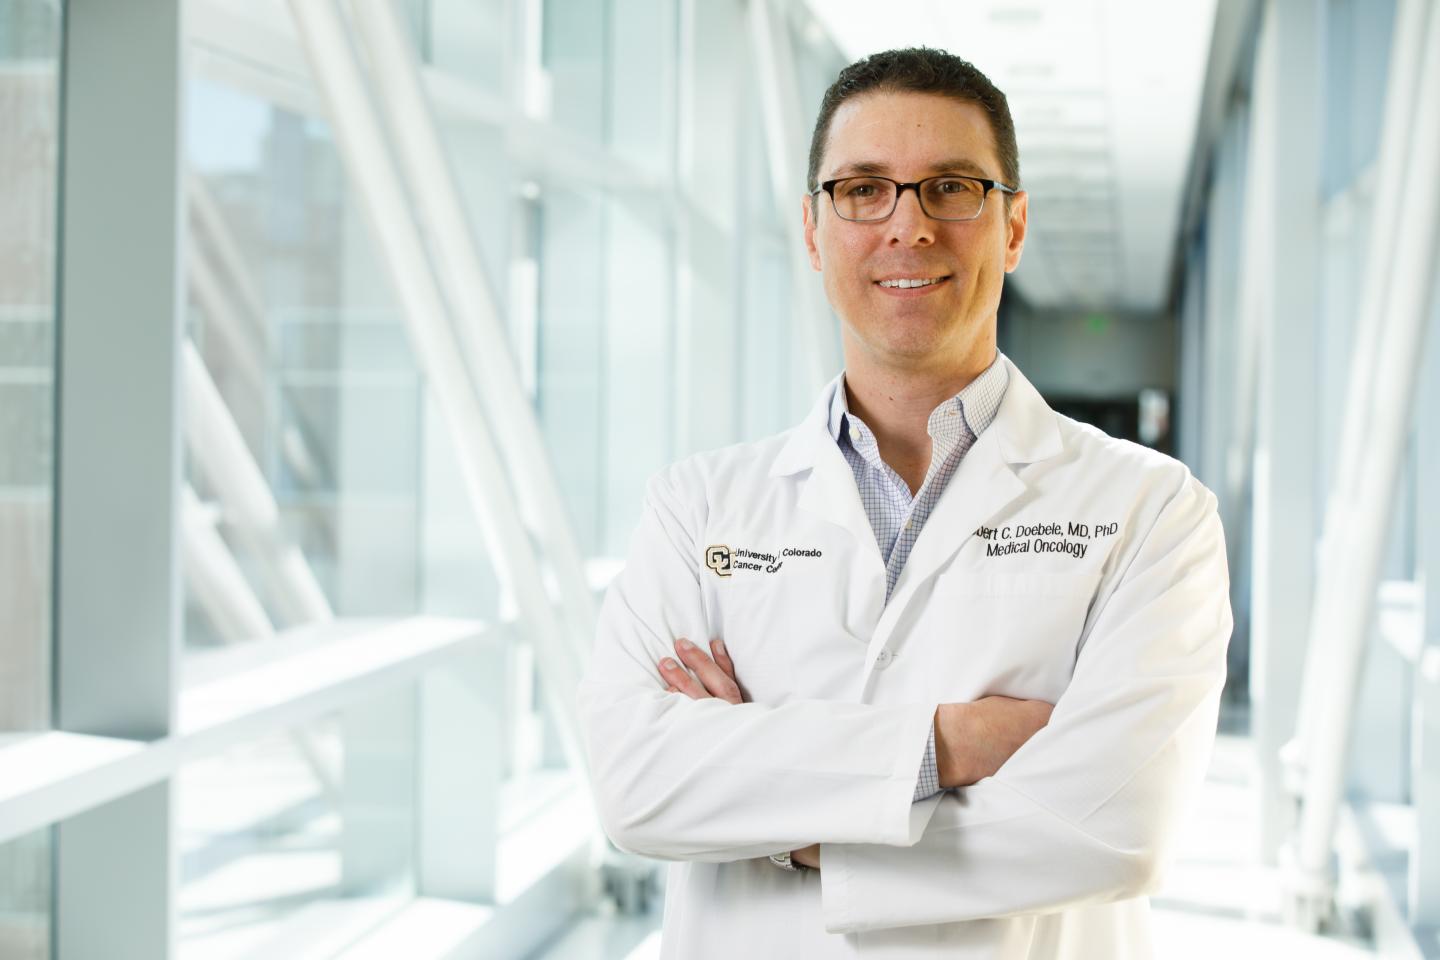 Robert C. Doebele, M.D., Ph.D., University of Colorado Cancer Center